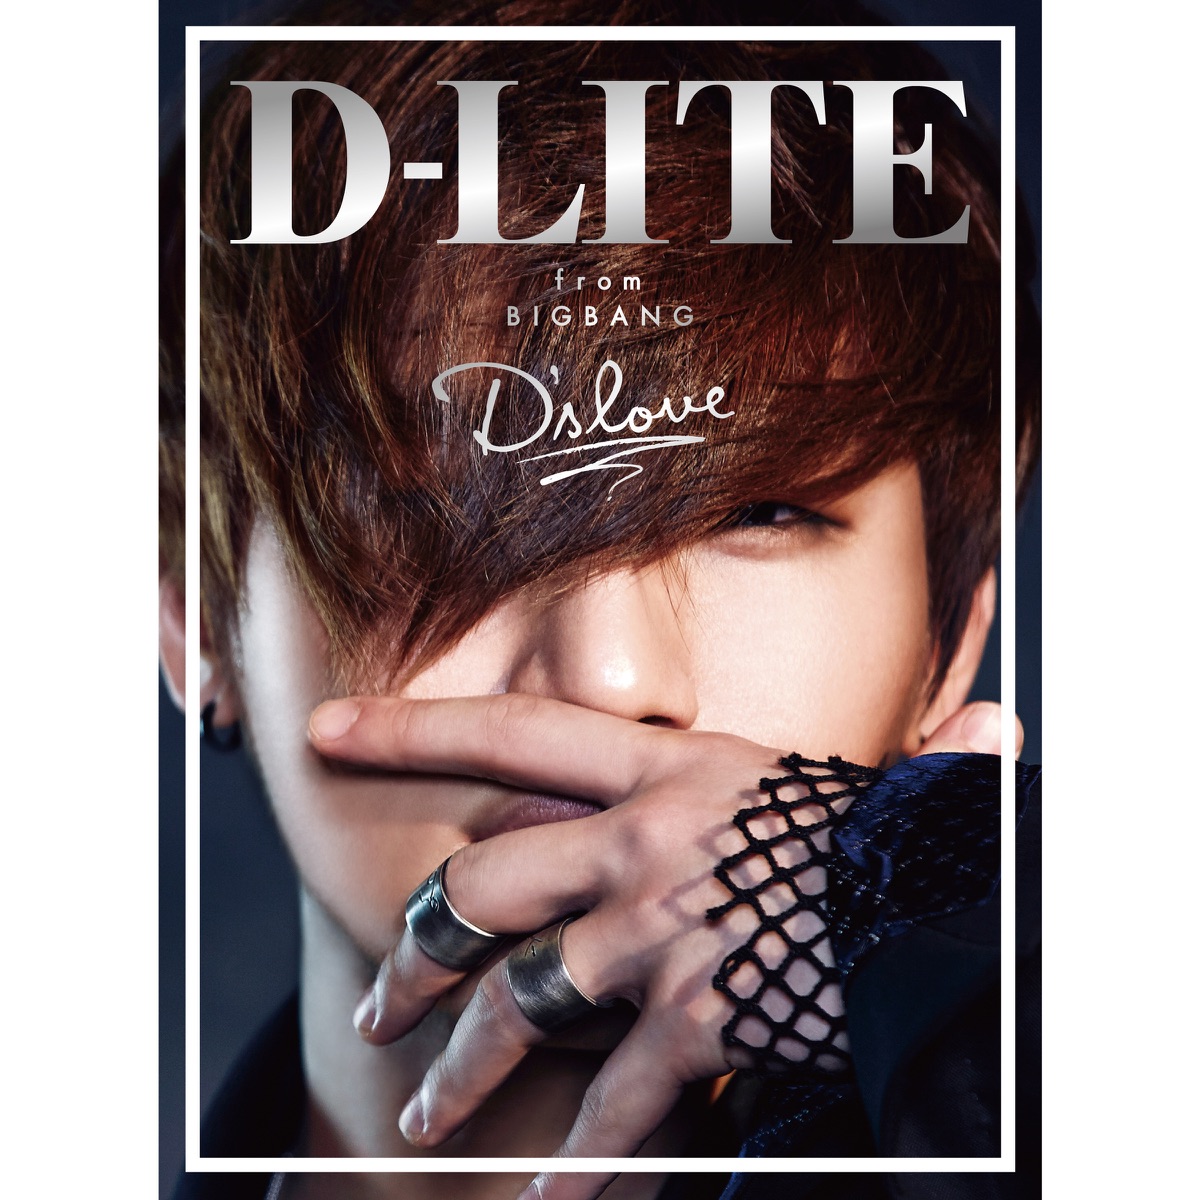 D-LITE (from BIGBANG) – D’slove (Japanese)